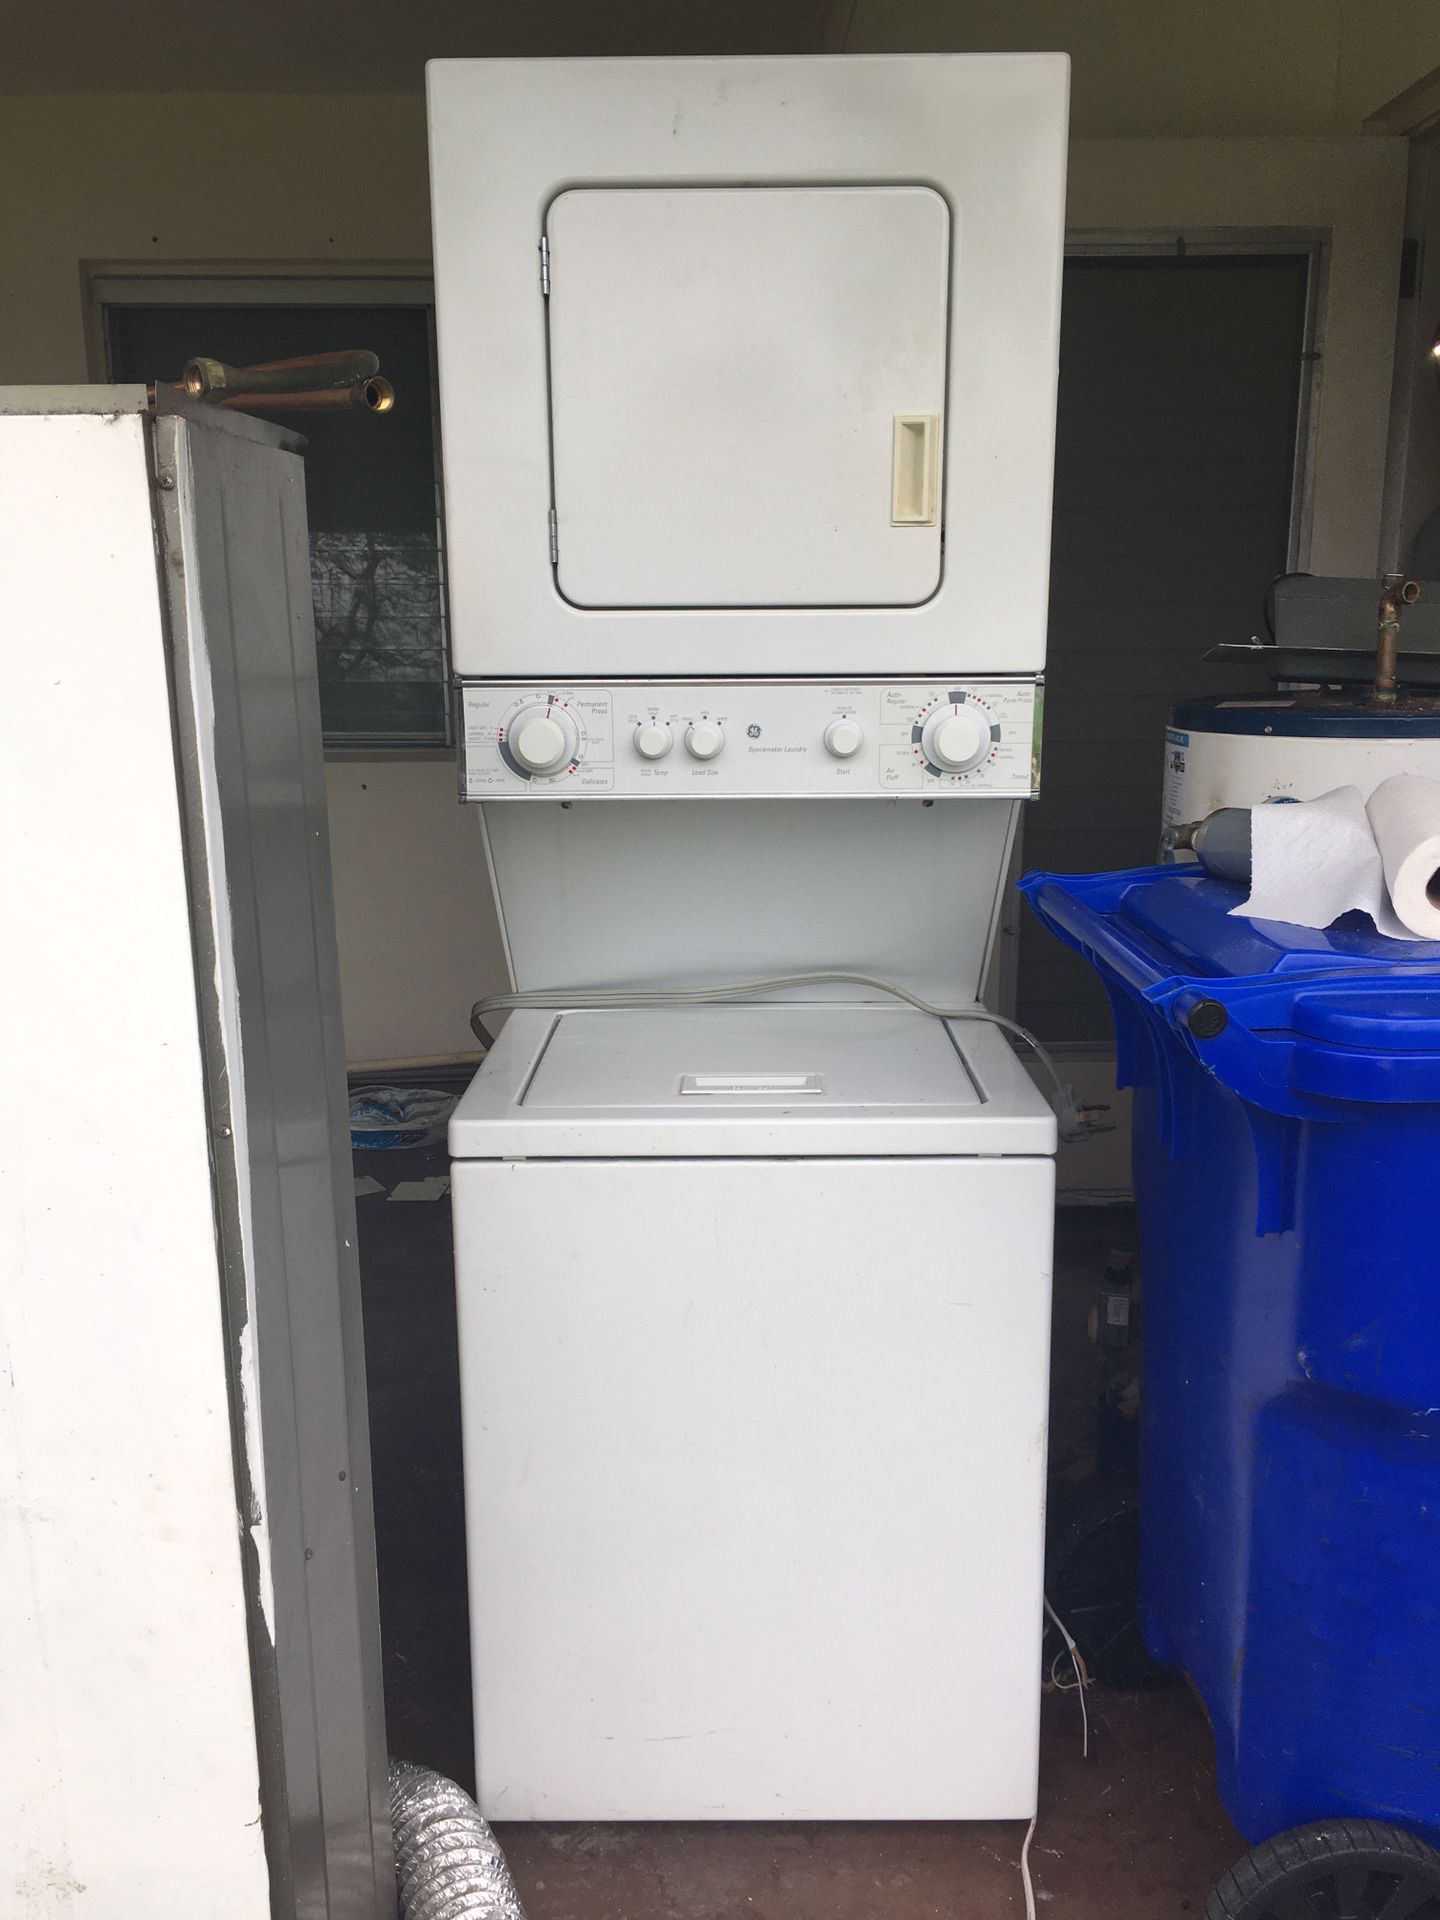 GE Spacemaker washer/dryer